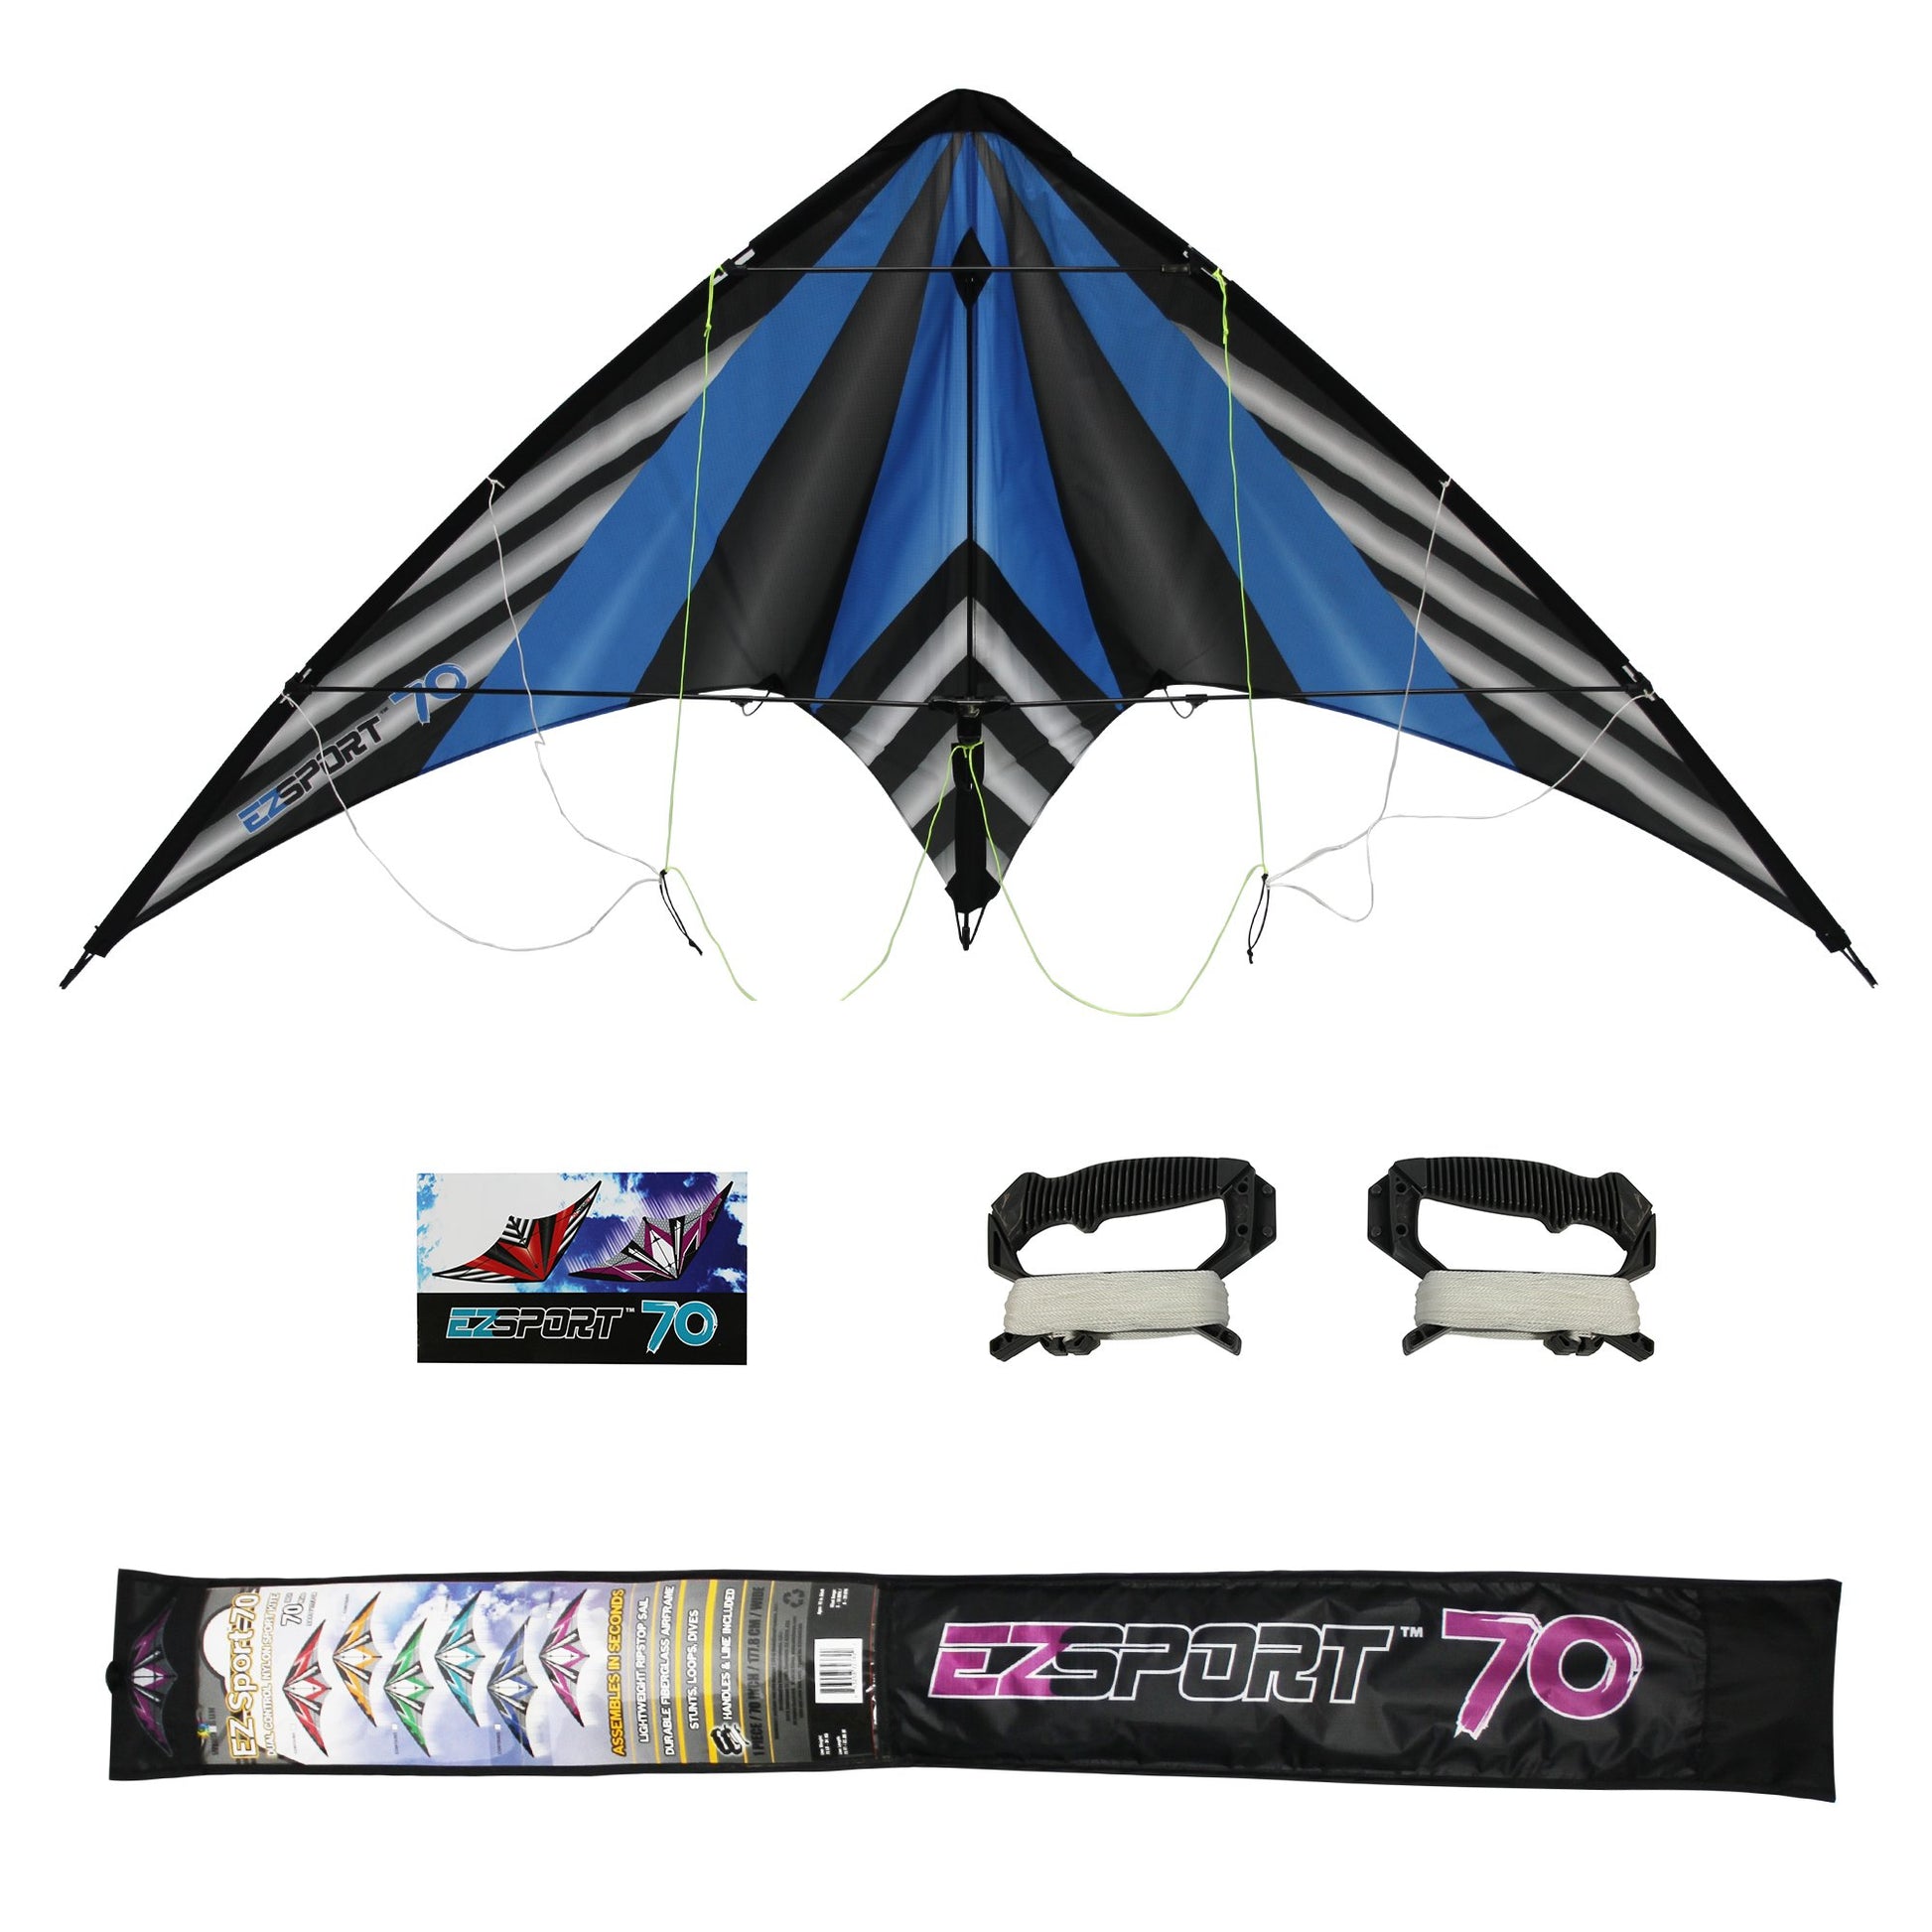 WindNSun EZ Sport 70 Dual Control Sport Kite Blue Stripe Nylon Kite photo showing handle